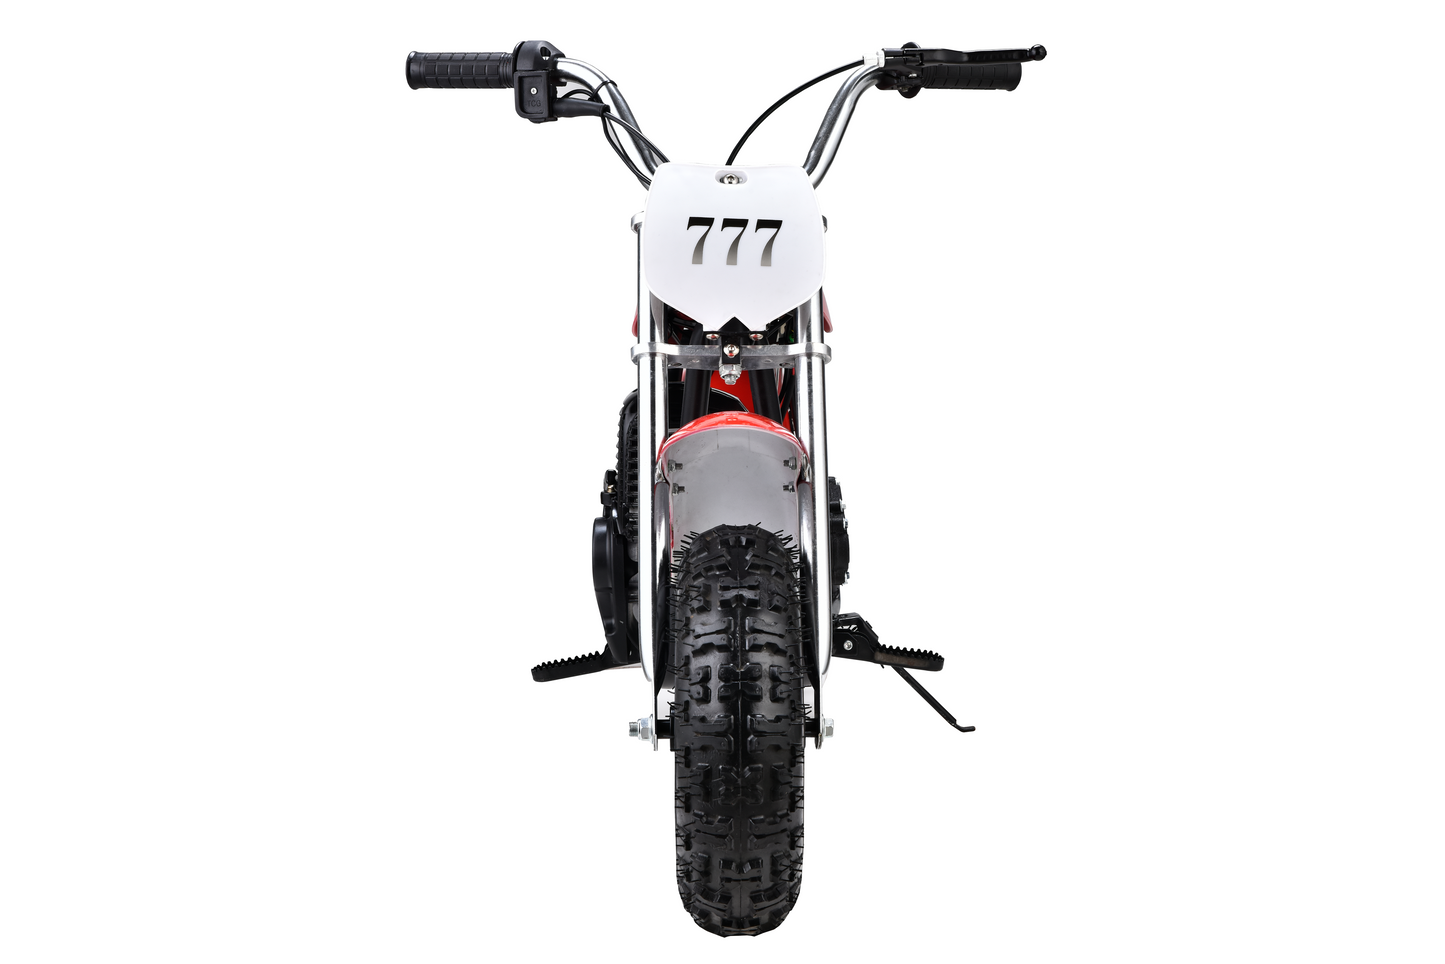 SYX MOTO MT-6 40cc 4-Stroke Mini Dirt Bike